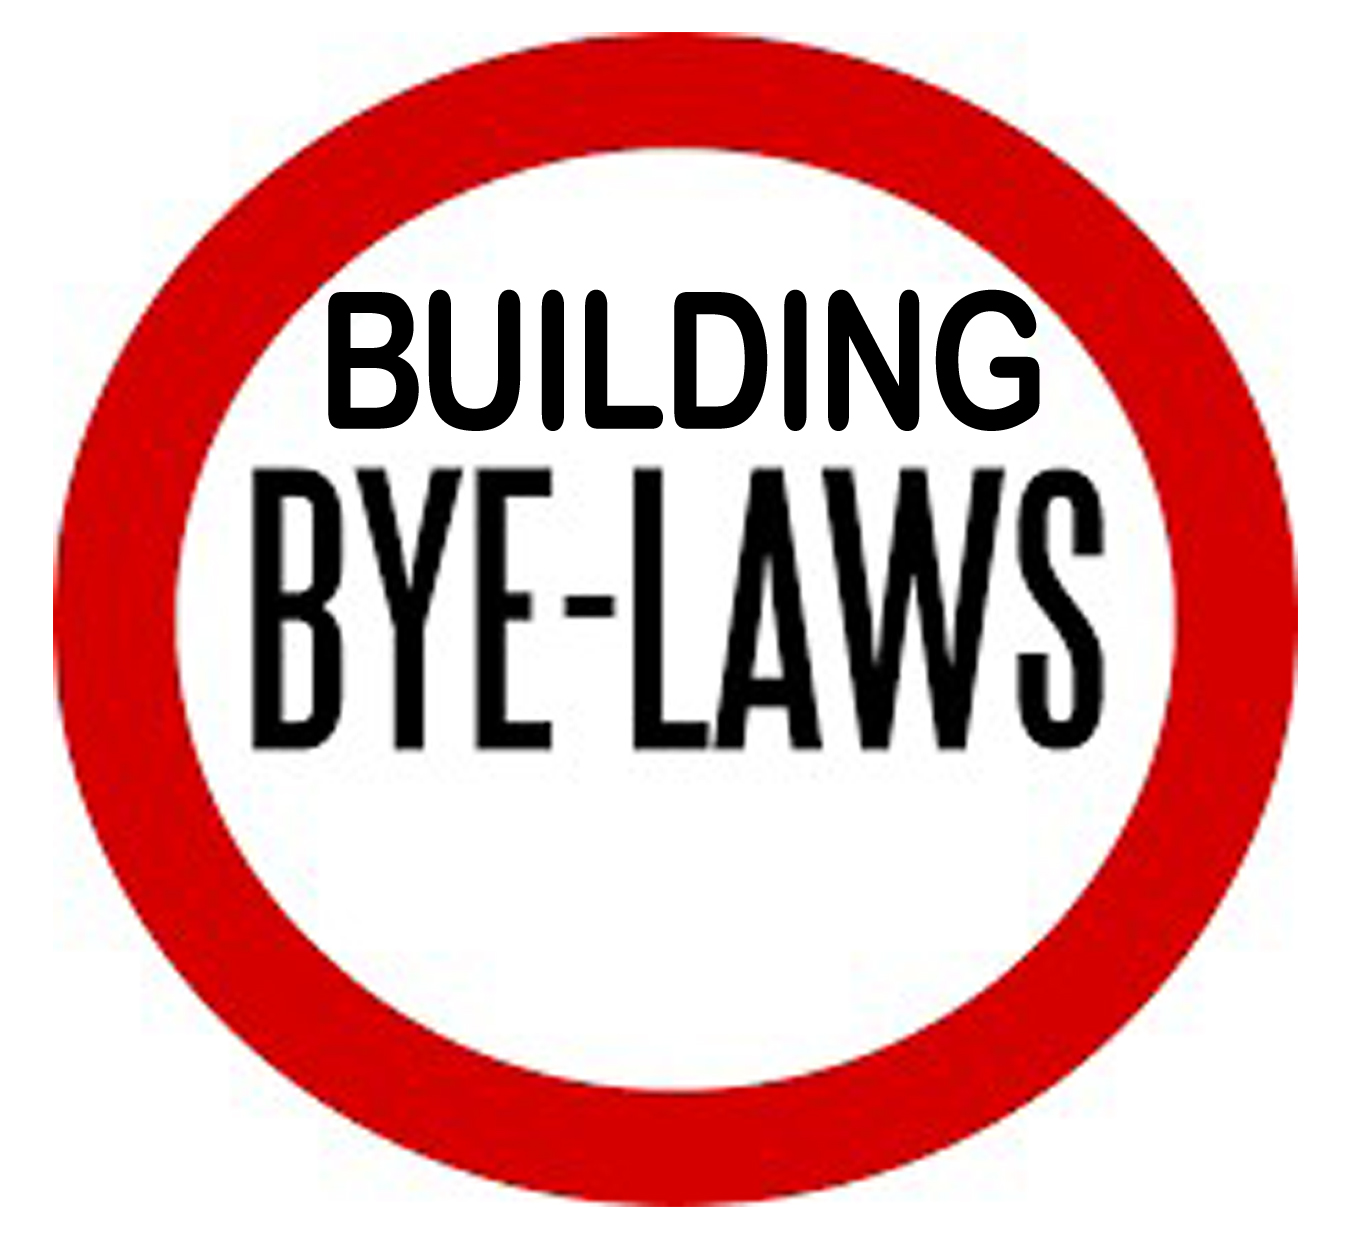 BUILDING BYE-LAWS